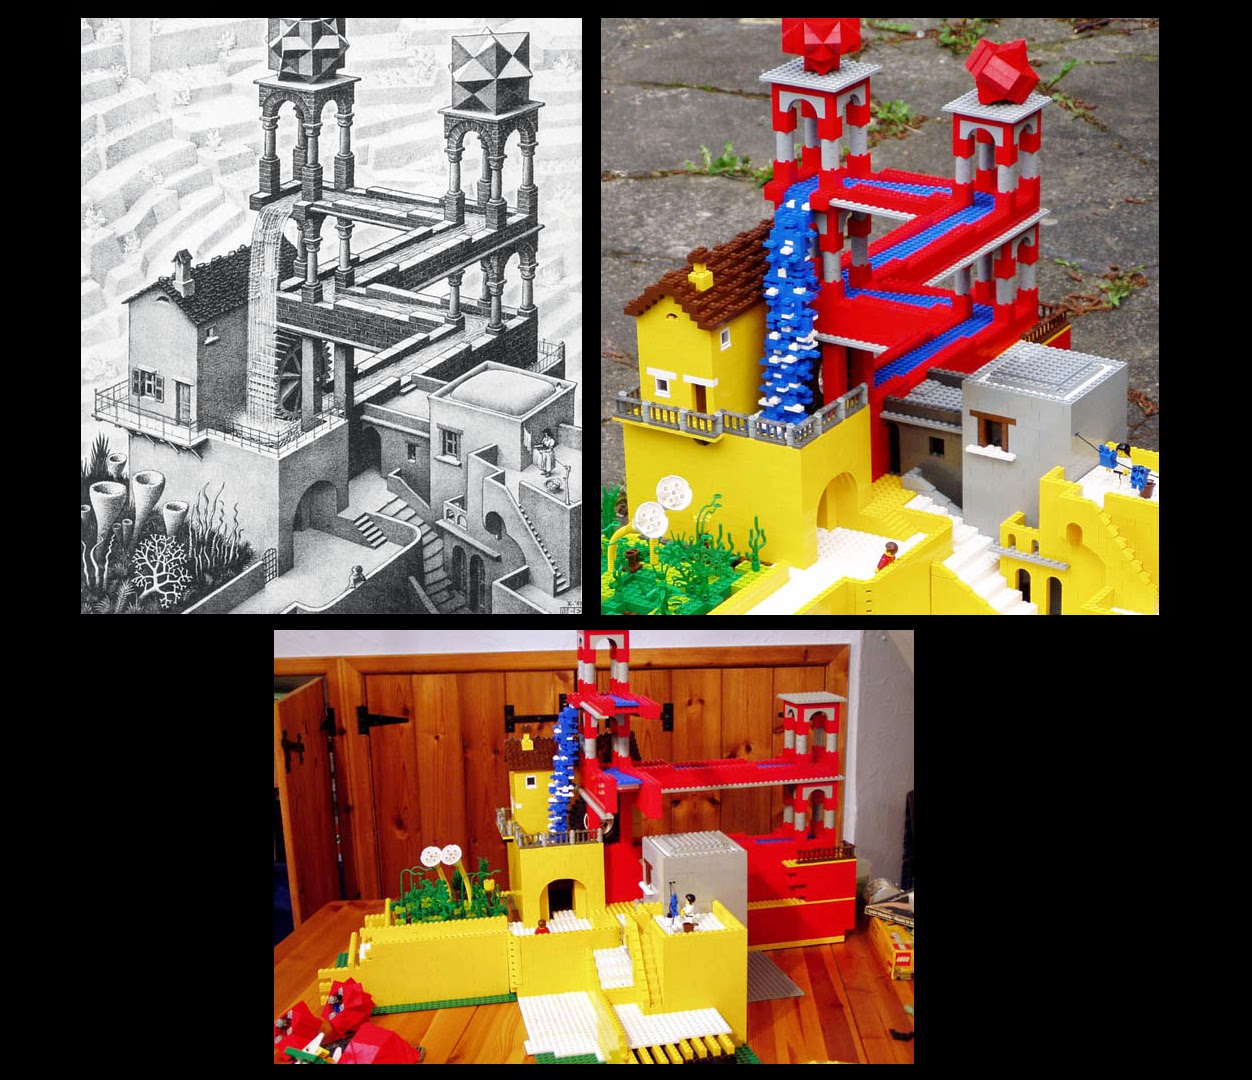 00-Andrew-Lipson-Surreal-M-C-Escher-v-Lego-in-Drawing-v-Sculpture-www-designstack-co